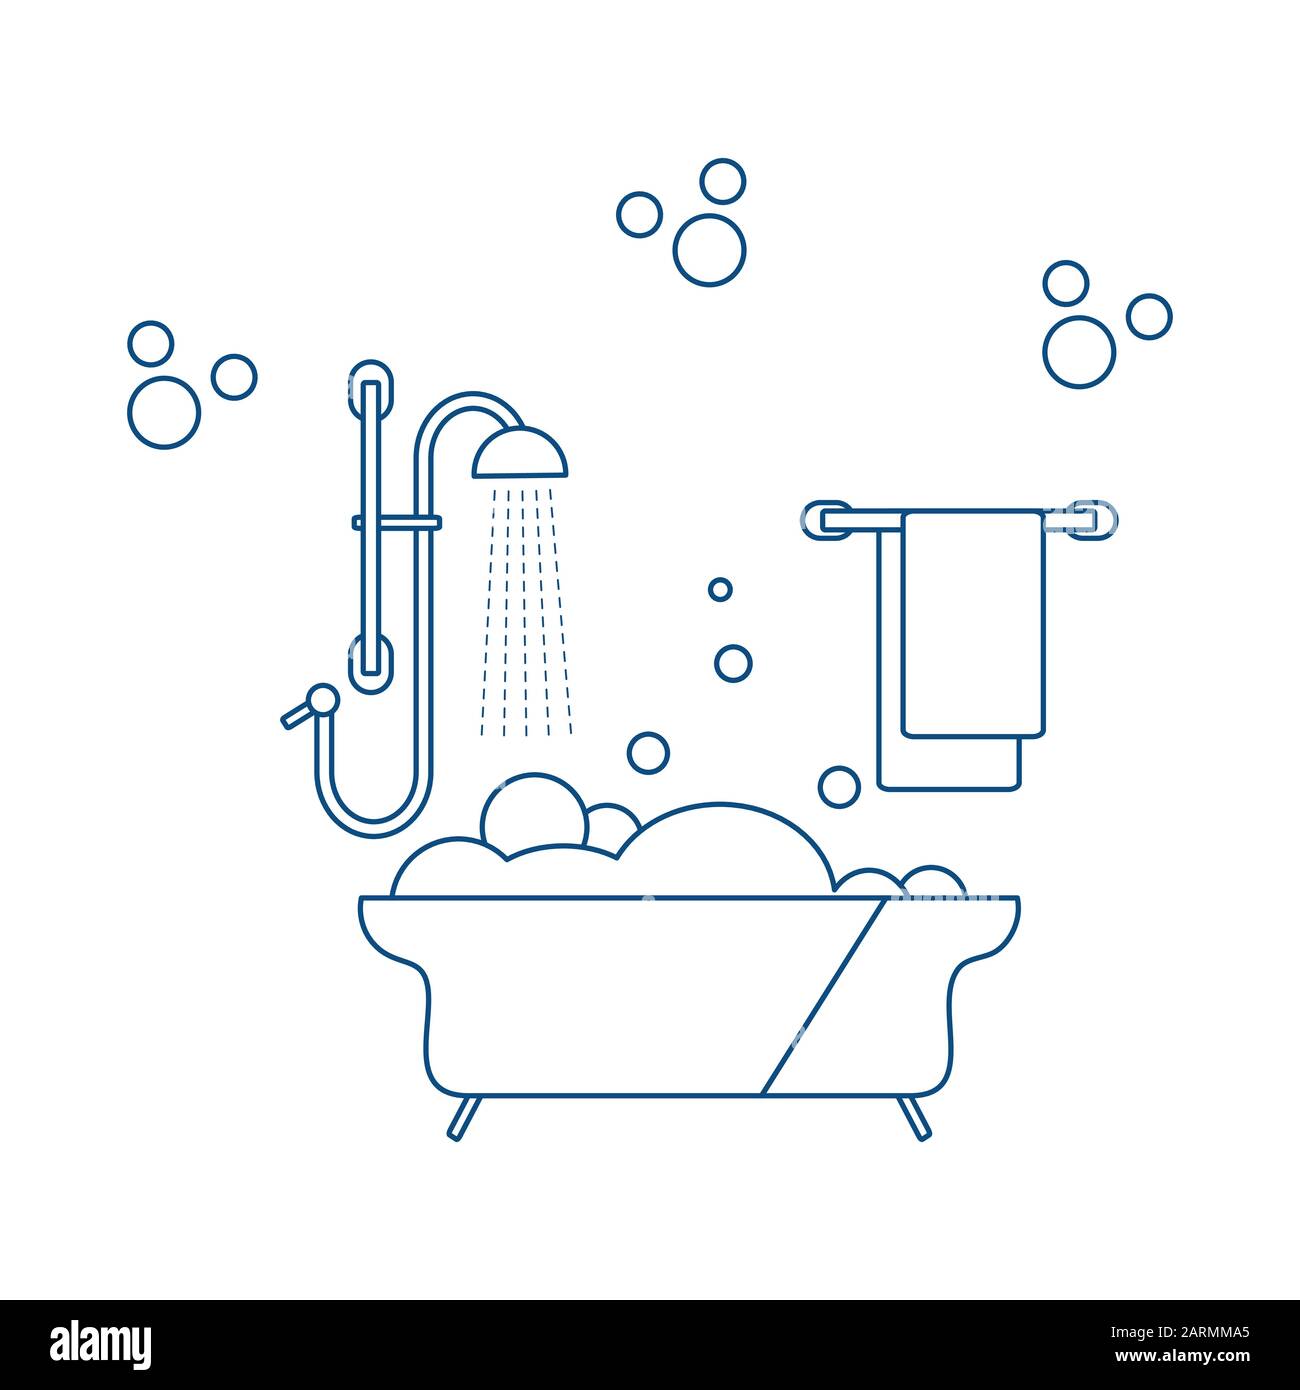 bubble bathtub drawing